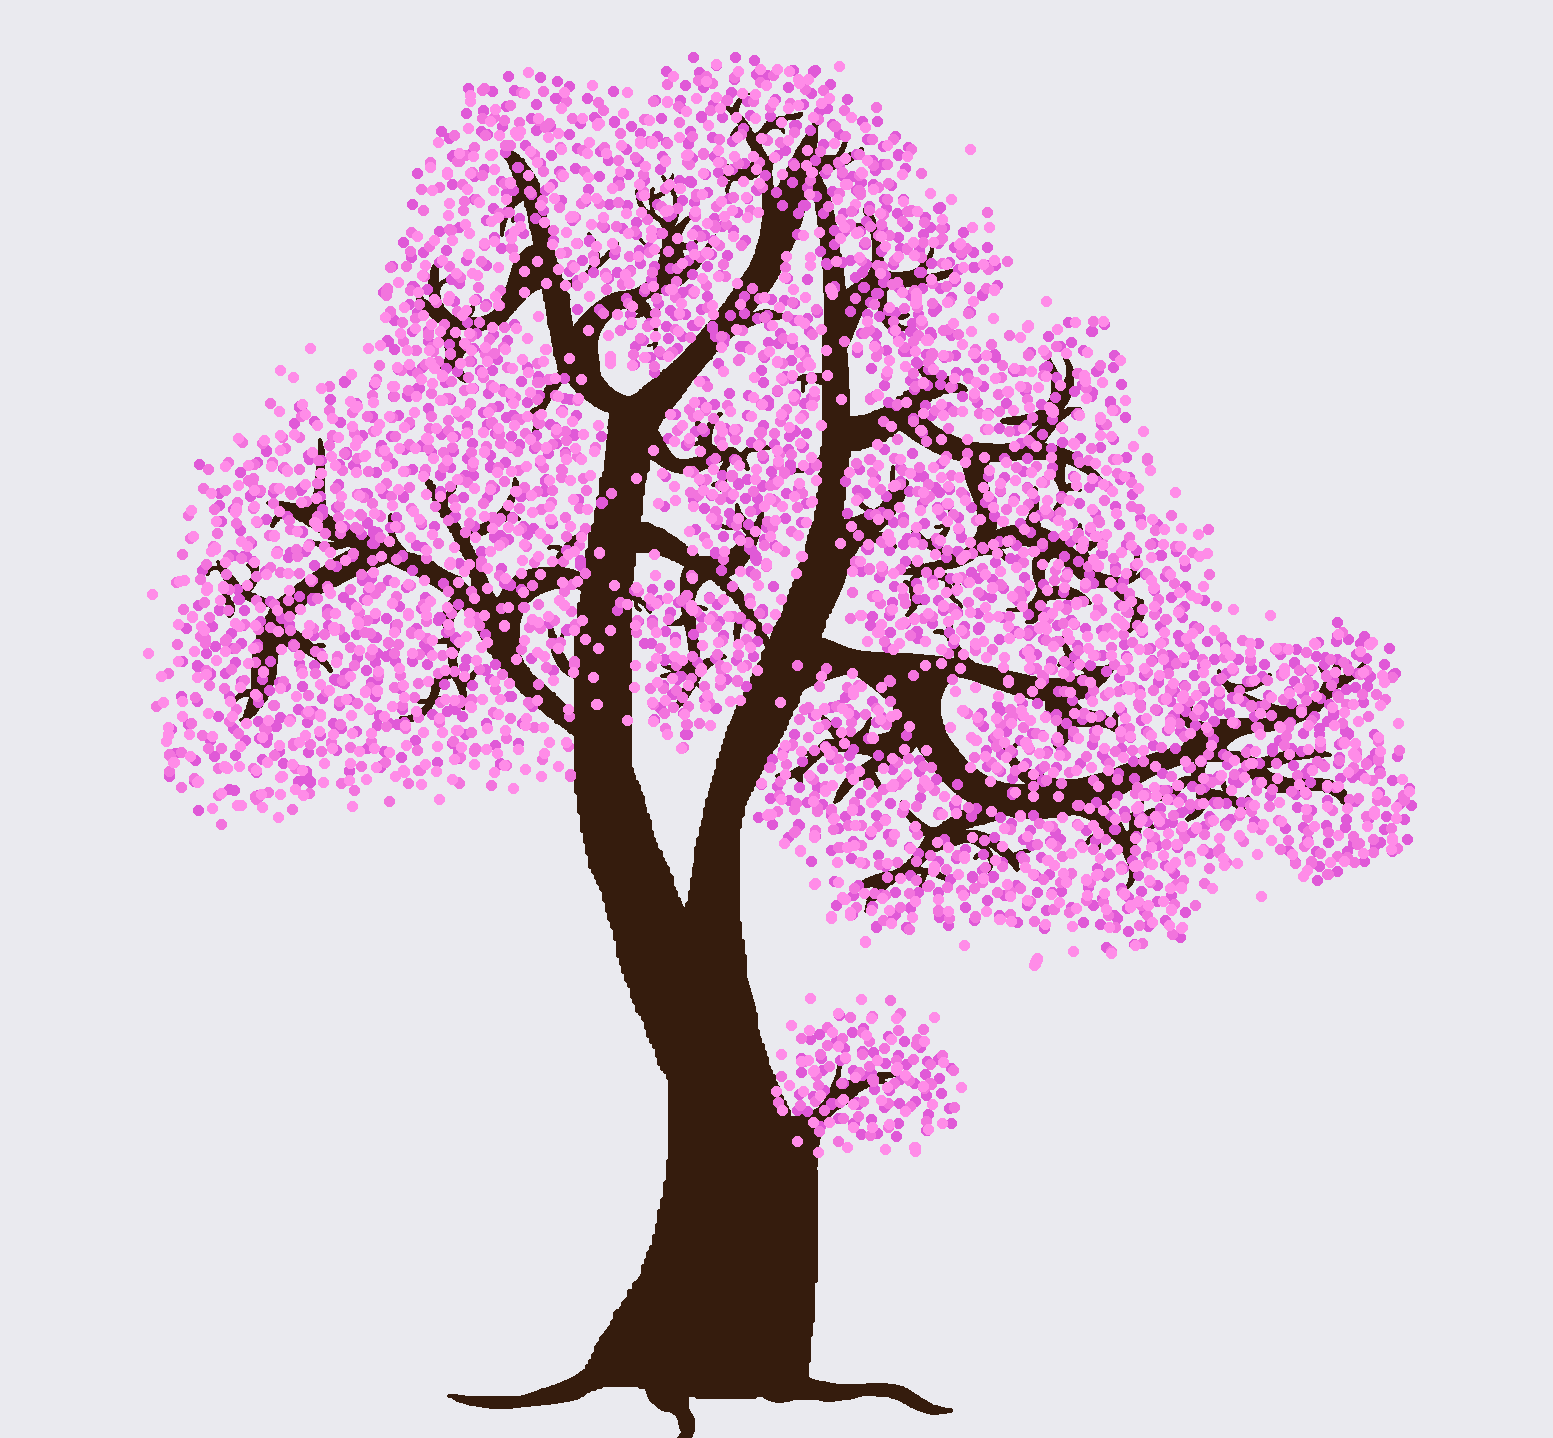 A very stylized drawing of a sakura tree